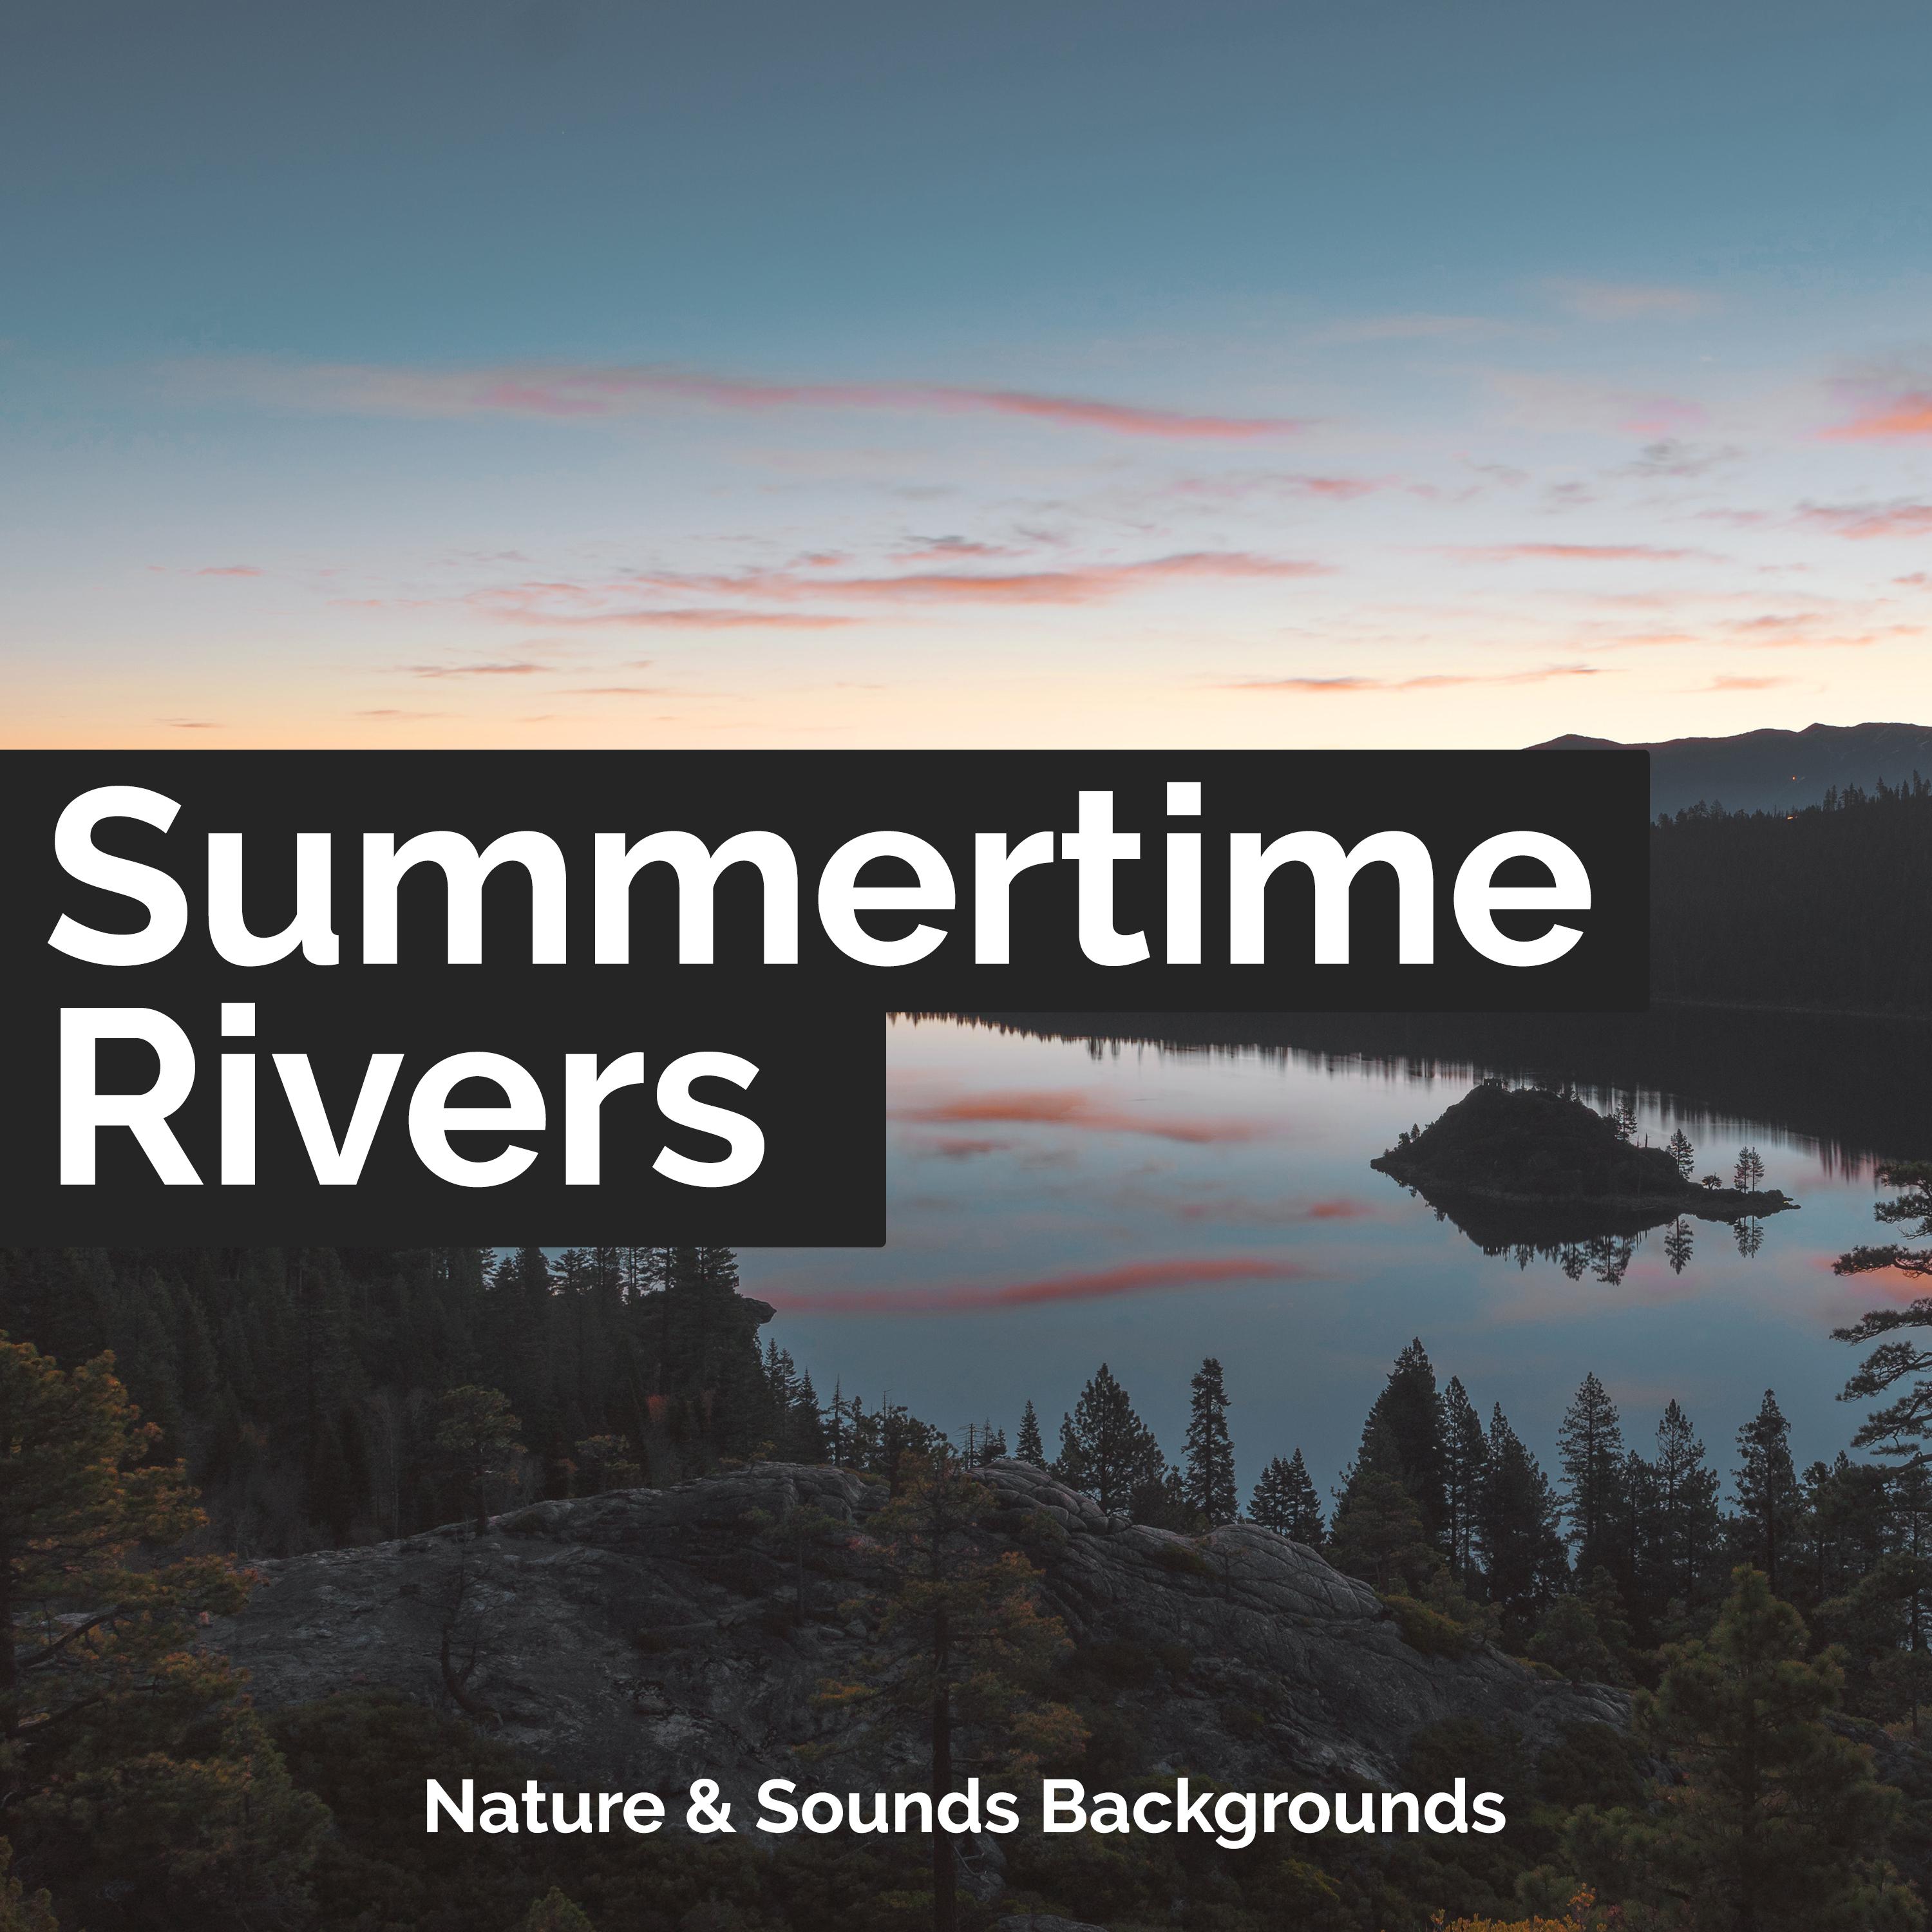 Summertime Rivers